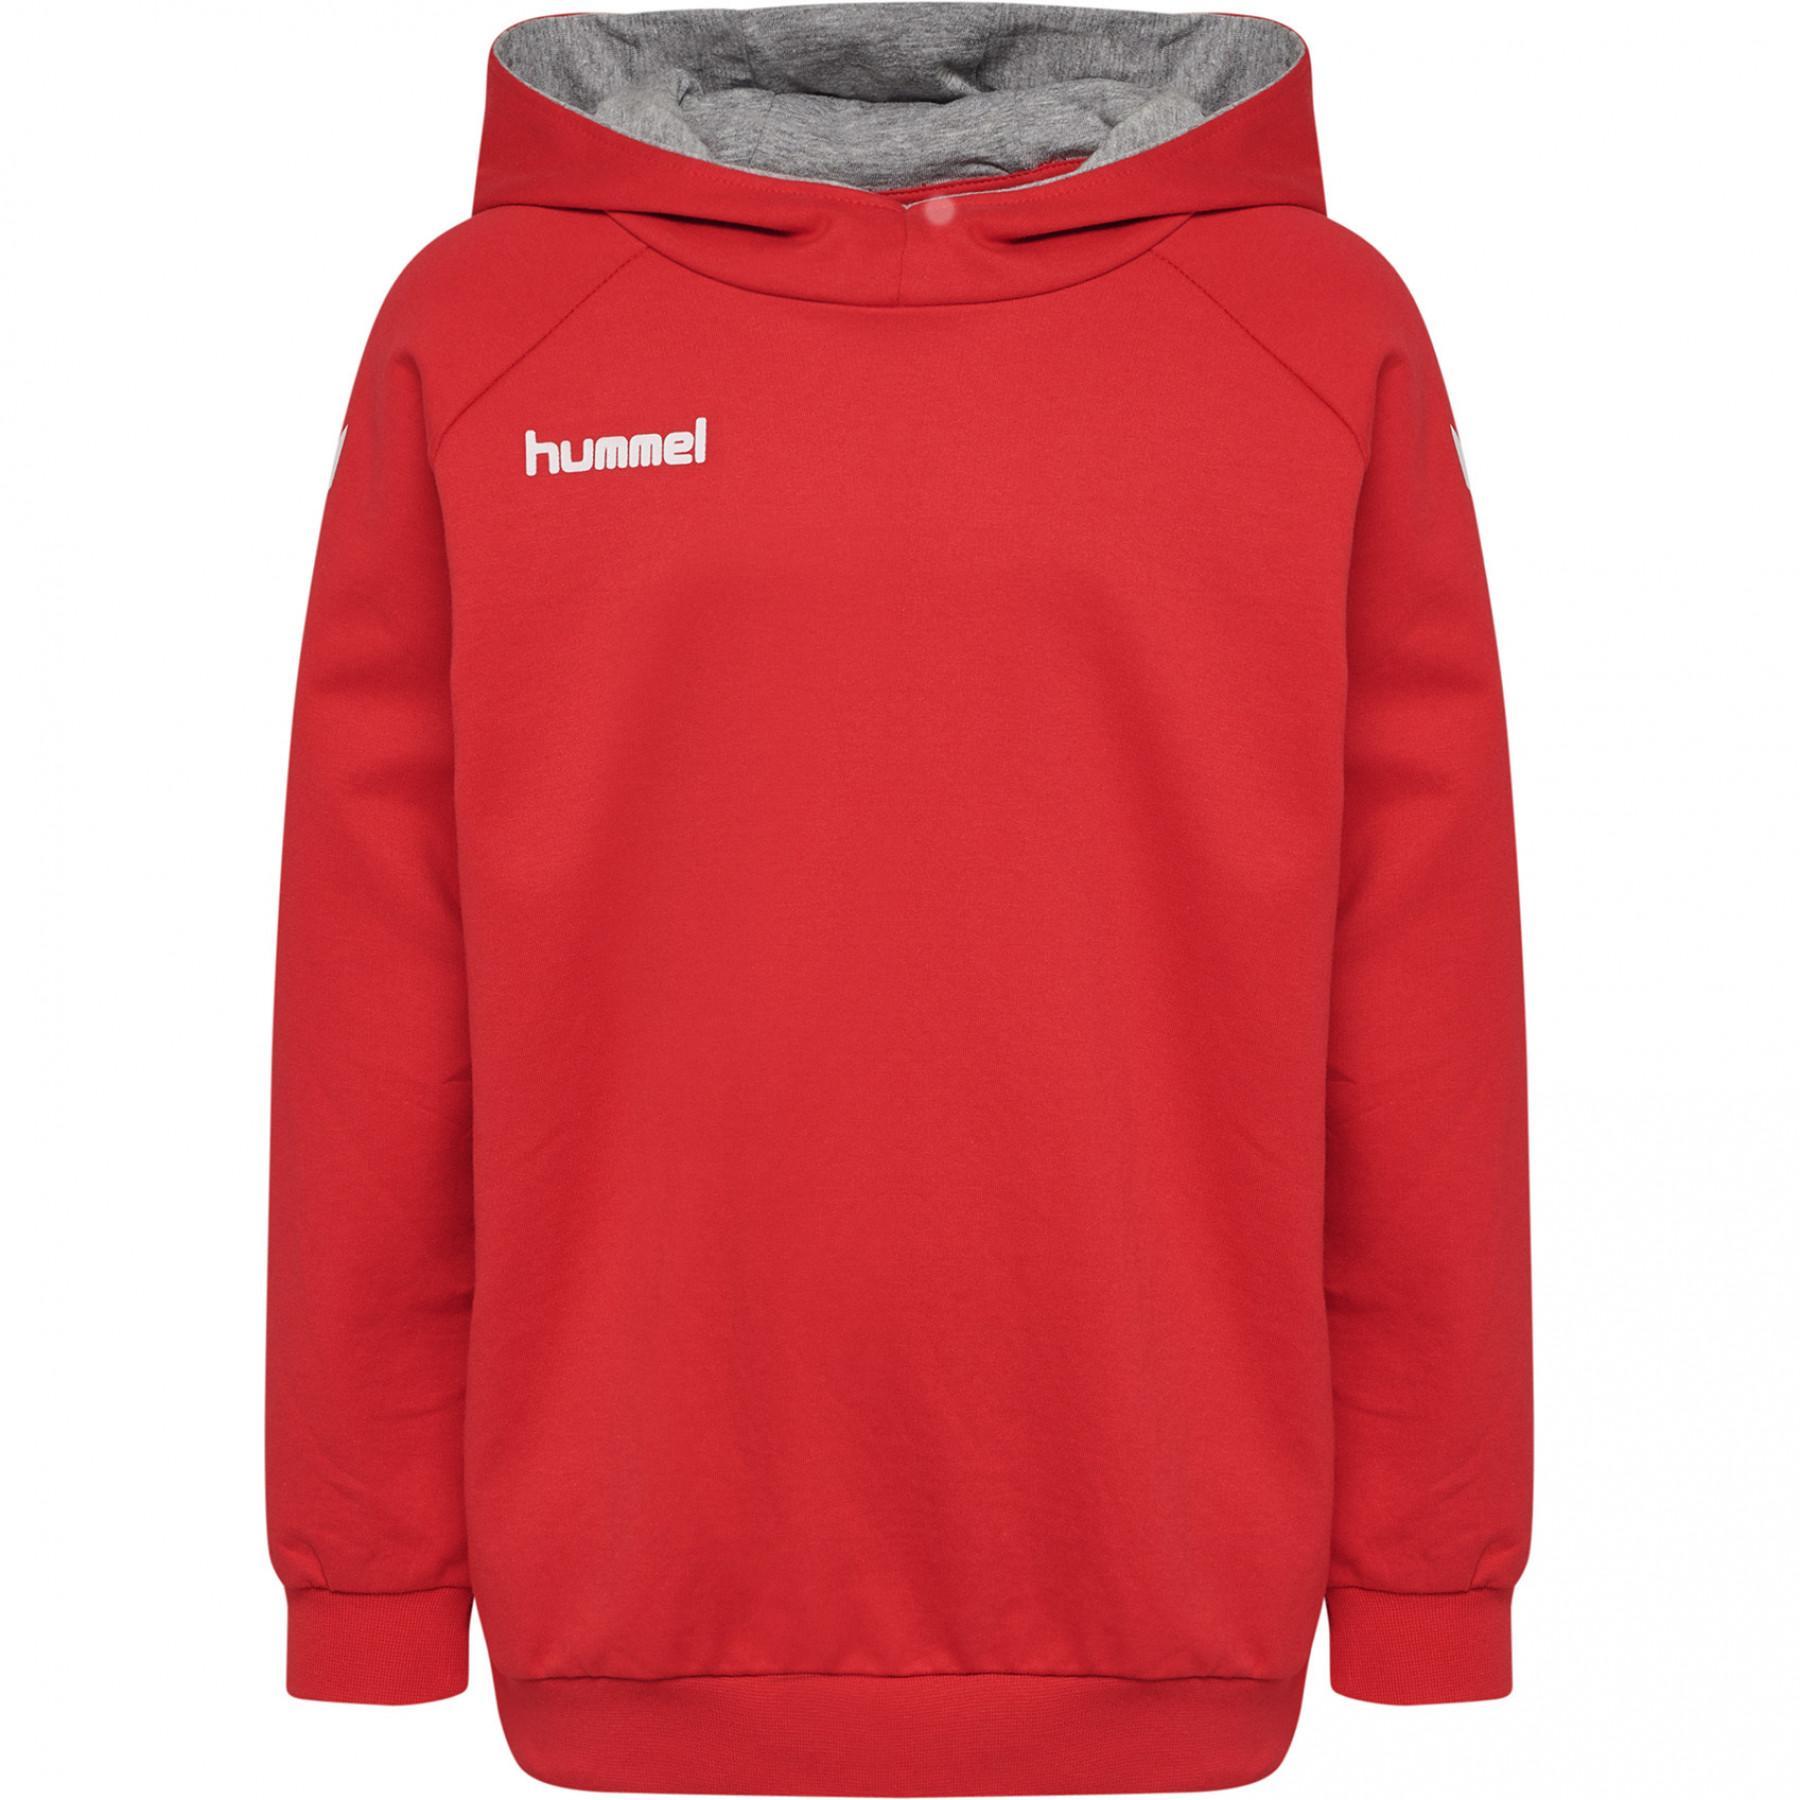 Hooded sweatshirt for children Hummel hmlGO cotton - Sweatshirts - Men\'s  wear - Handball wear